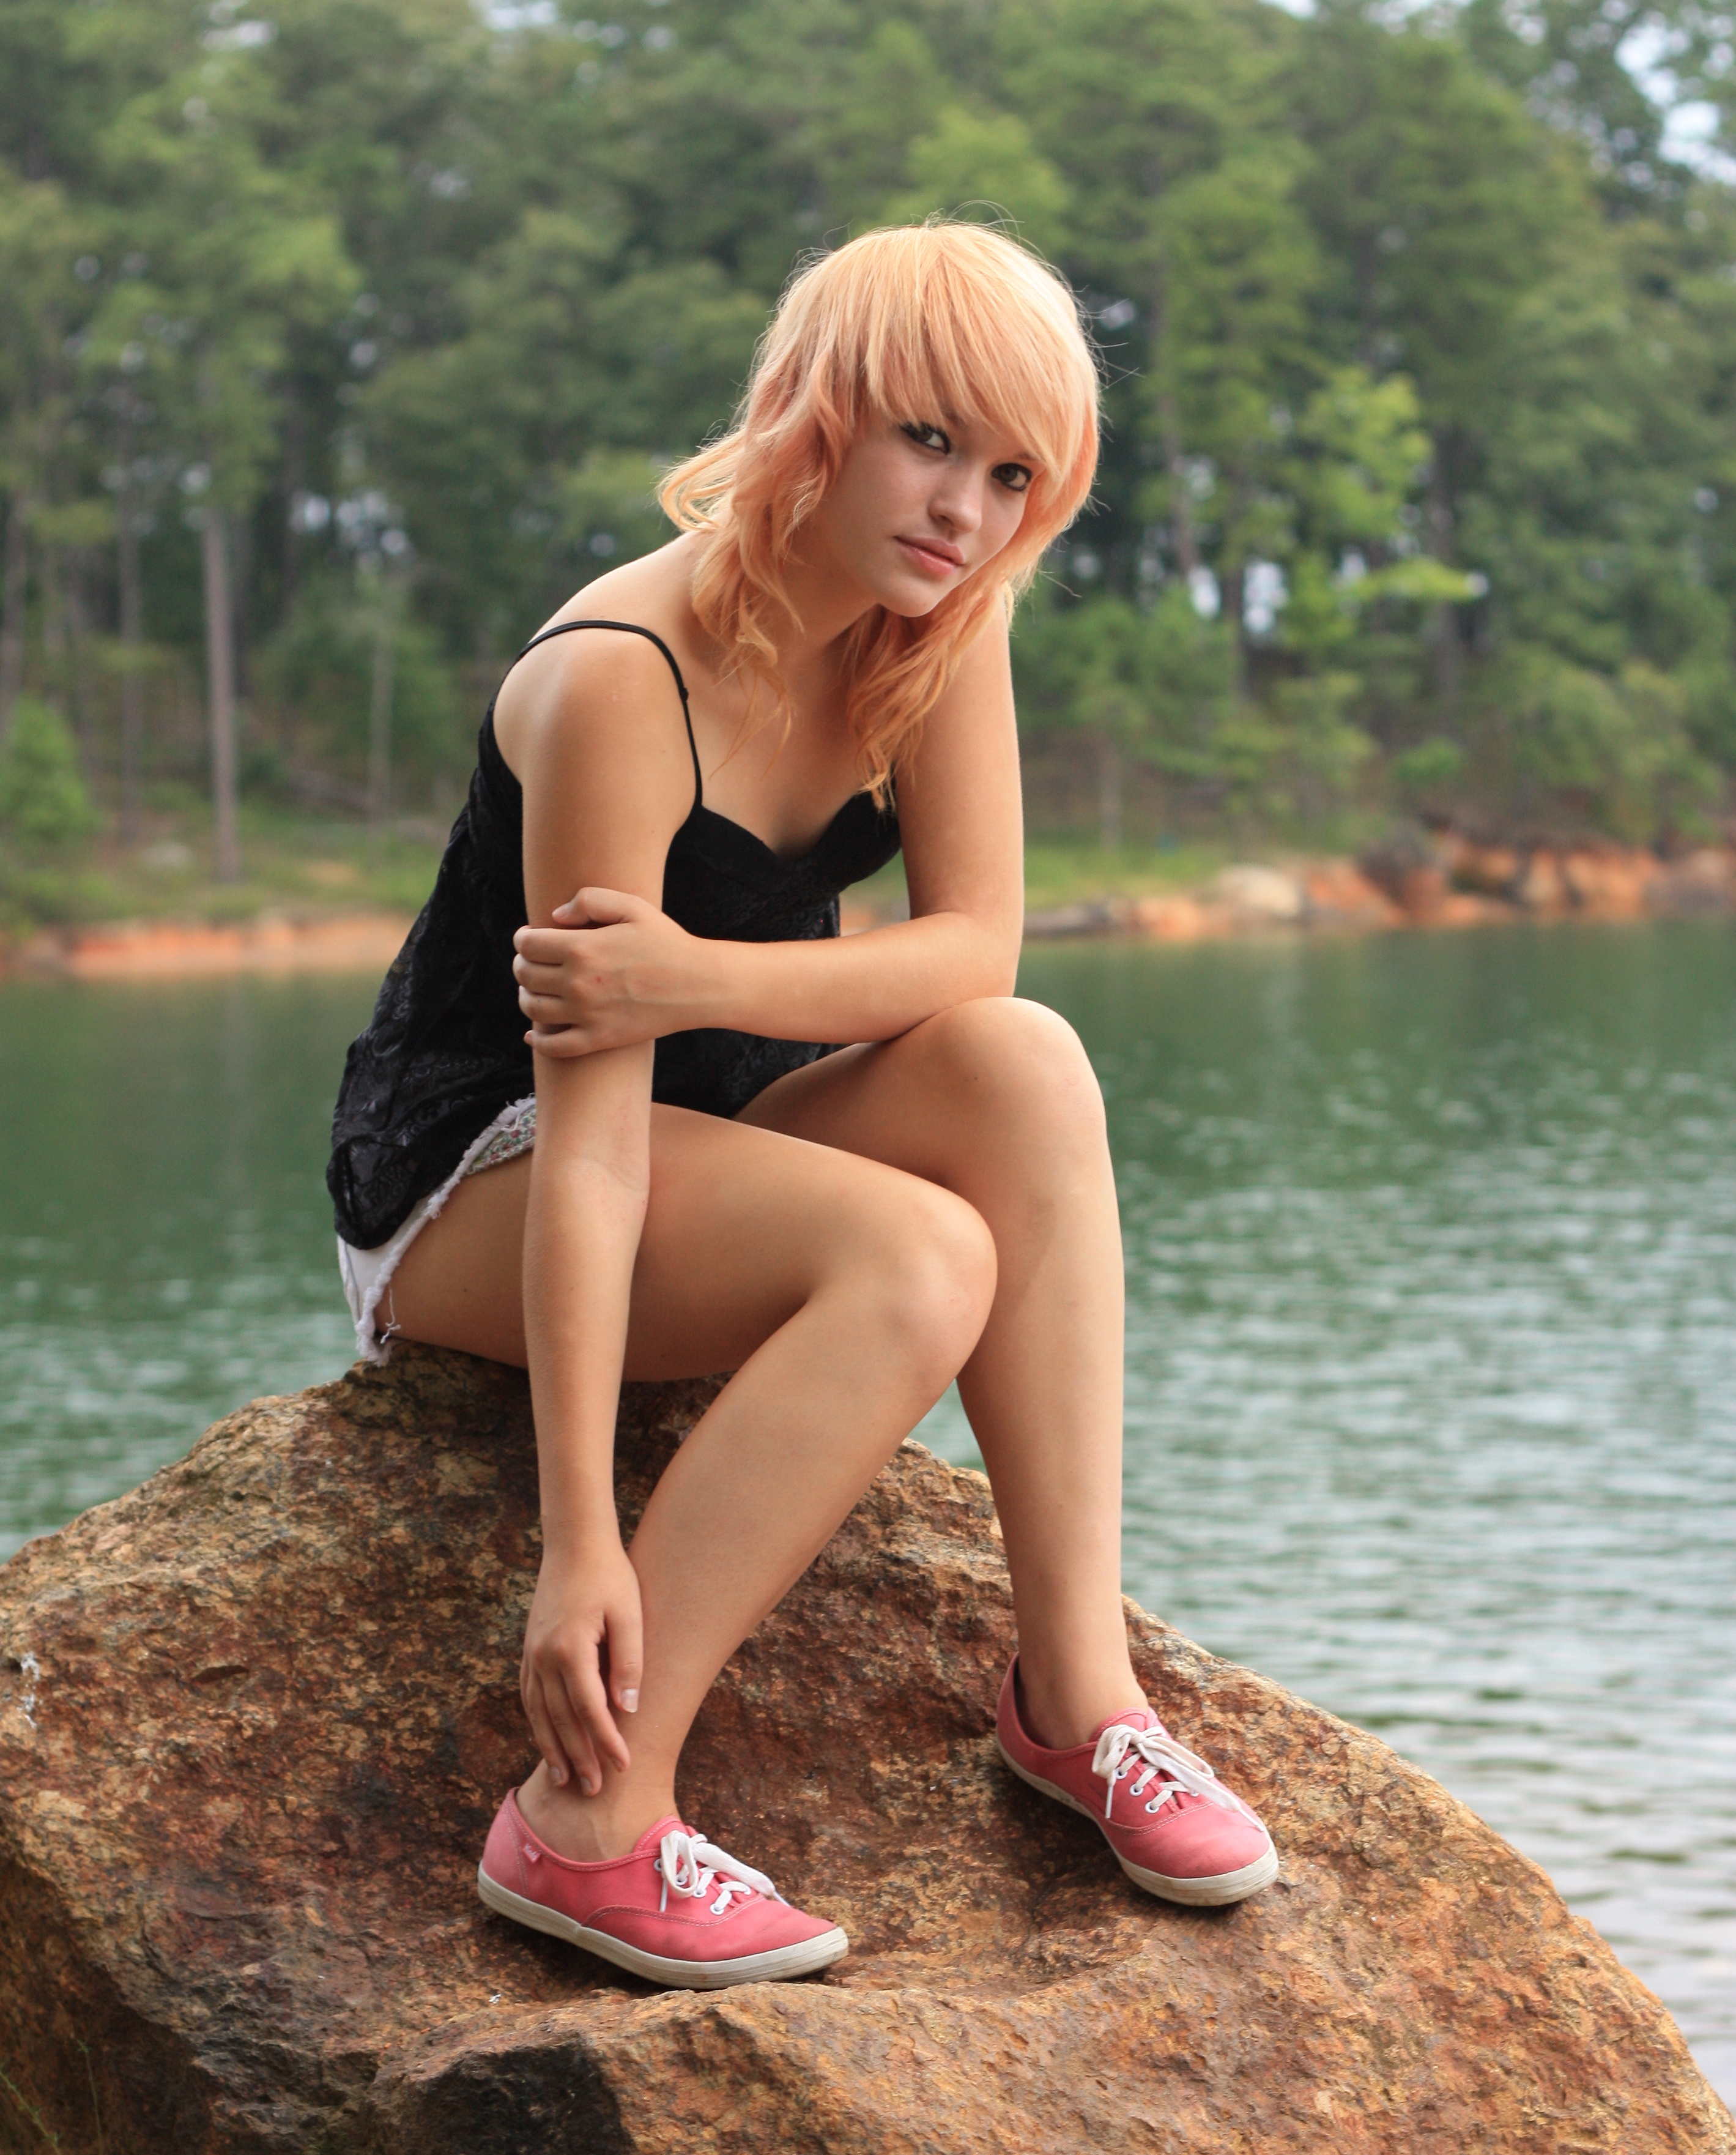 A beautiful young woman posing on a rock photo